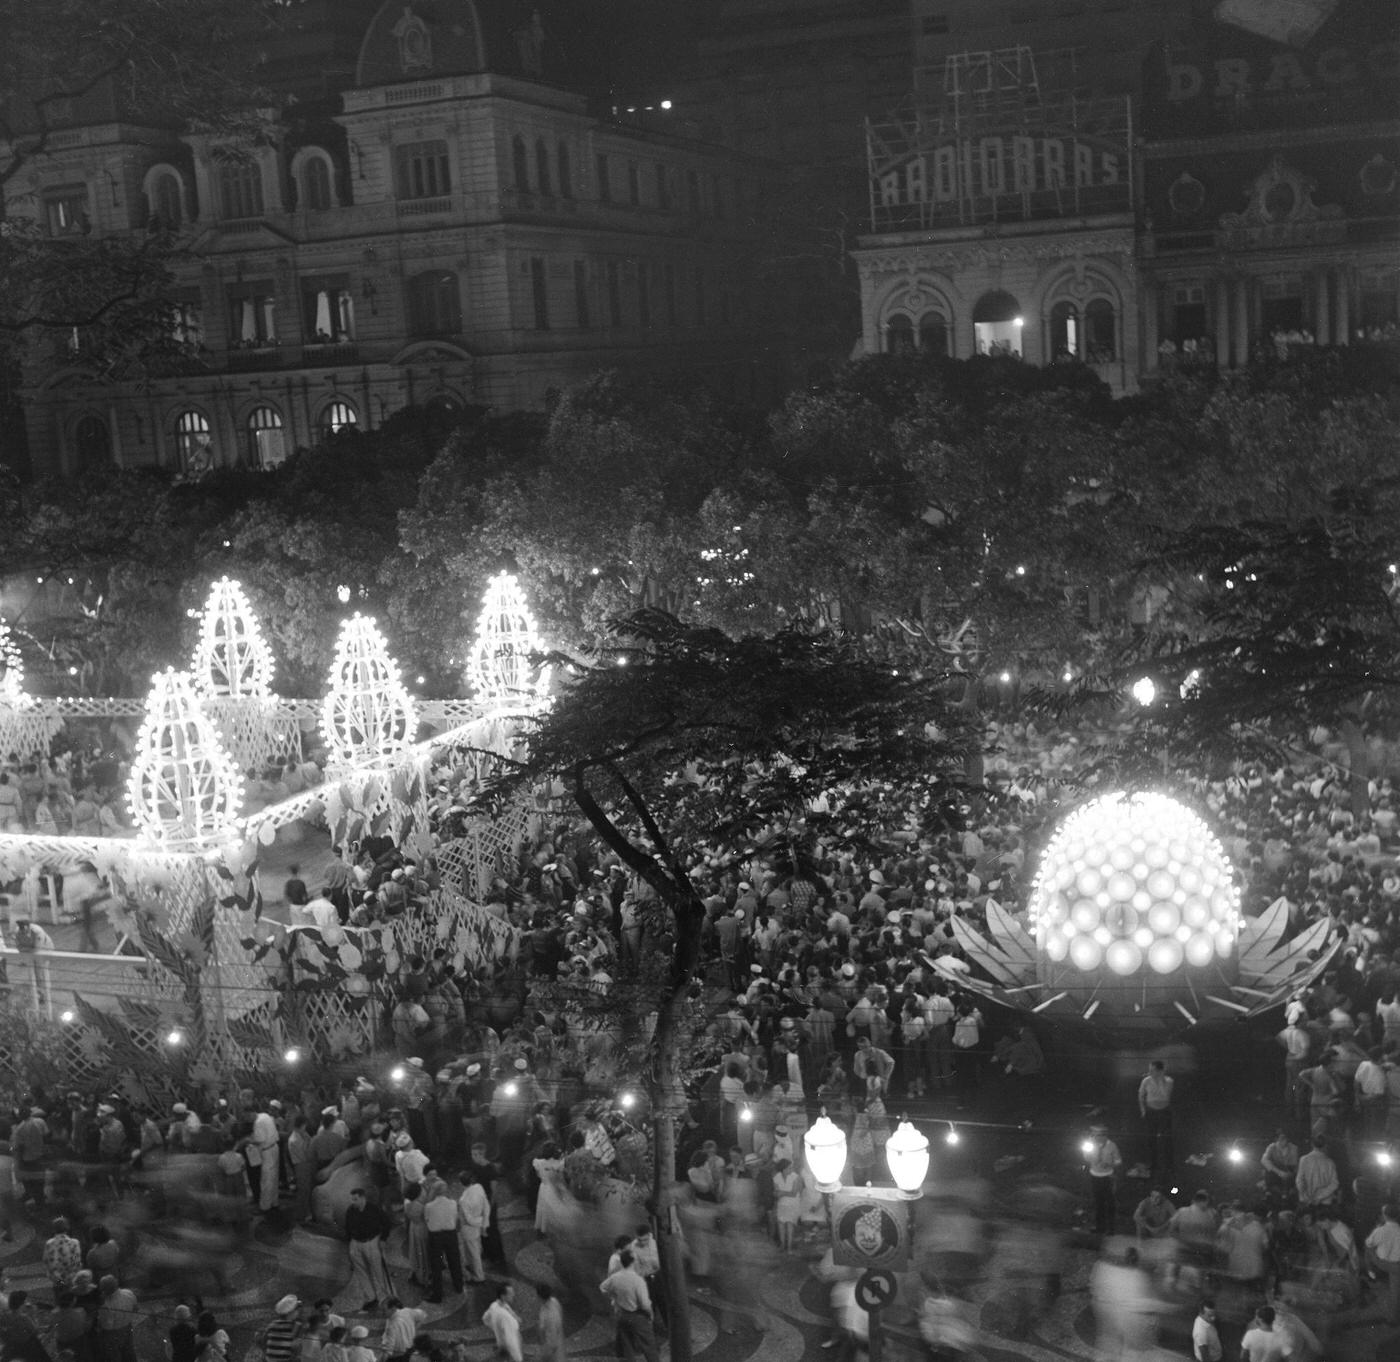 Nighttime Carnival Revelers, Rio 1953